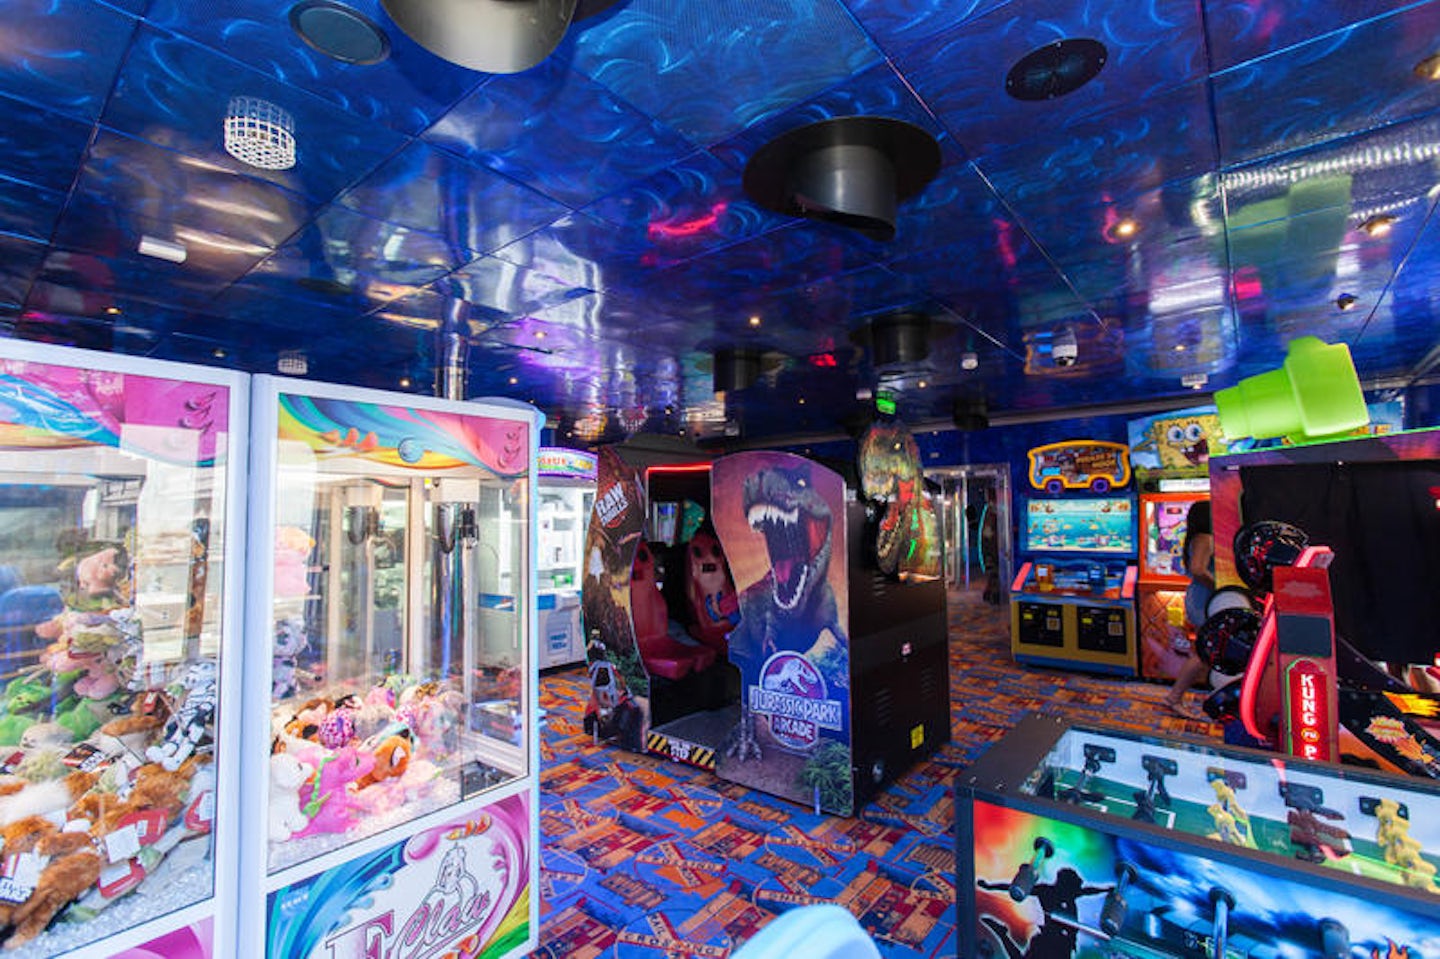 Caboose Video Arcade on Carnival Valor